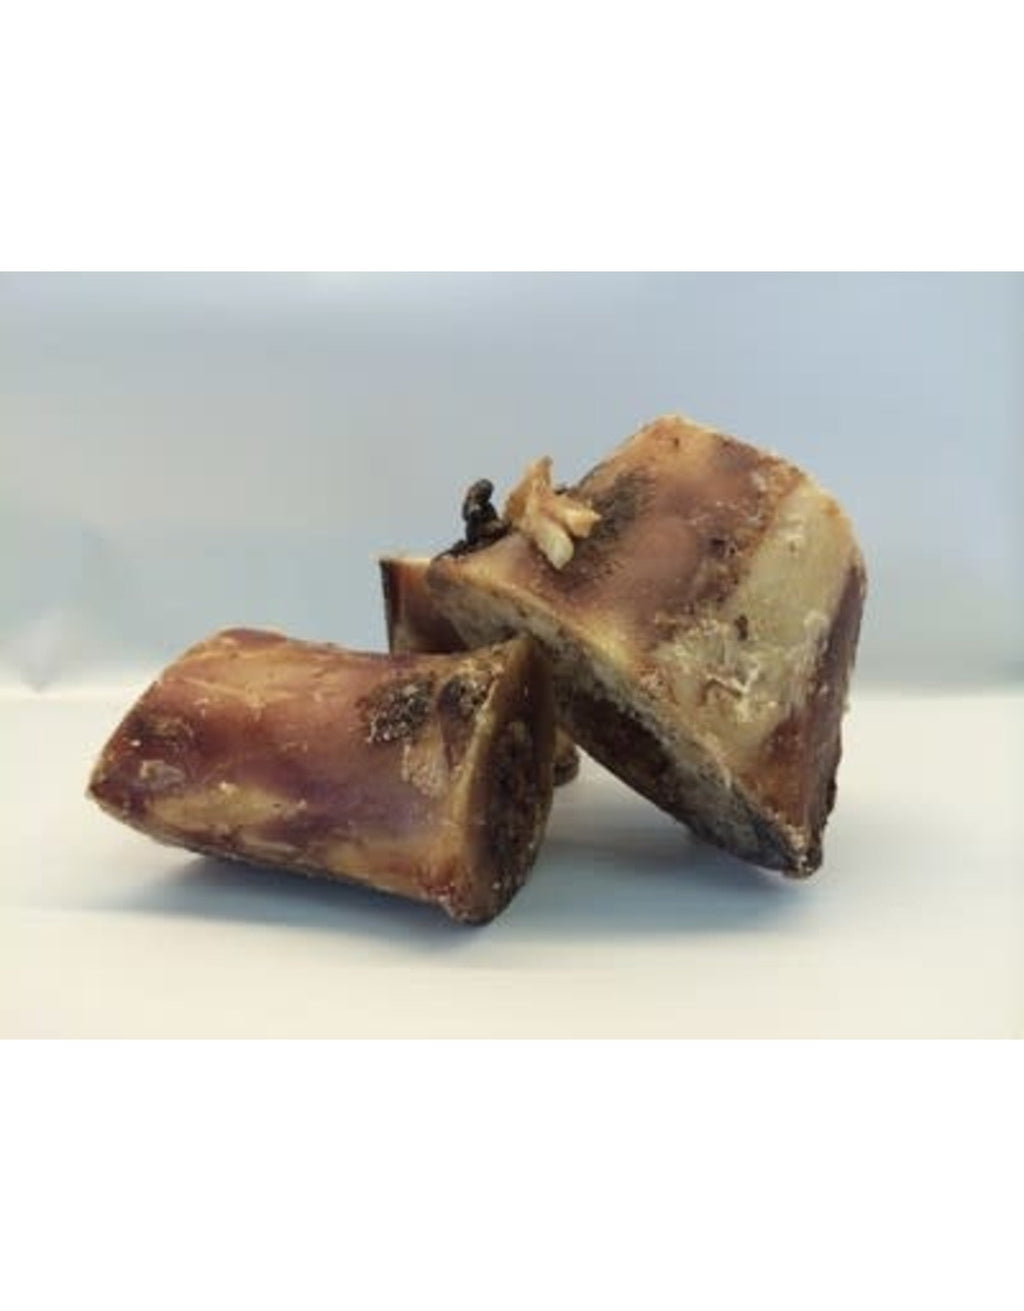 K-9 Kraving Treats 2" - 3" Beef Pipe Bone (dried) Baked Dog Treats - Case of 10 lb  